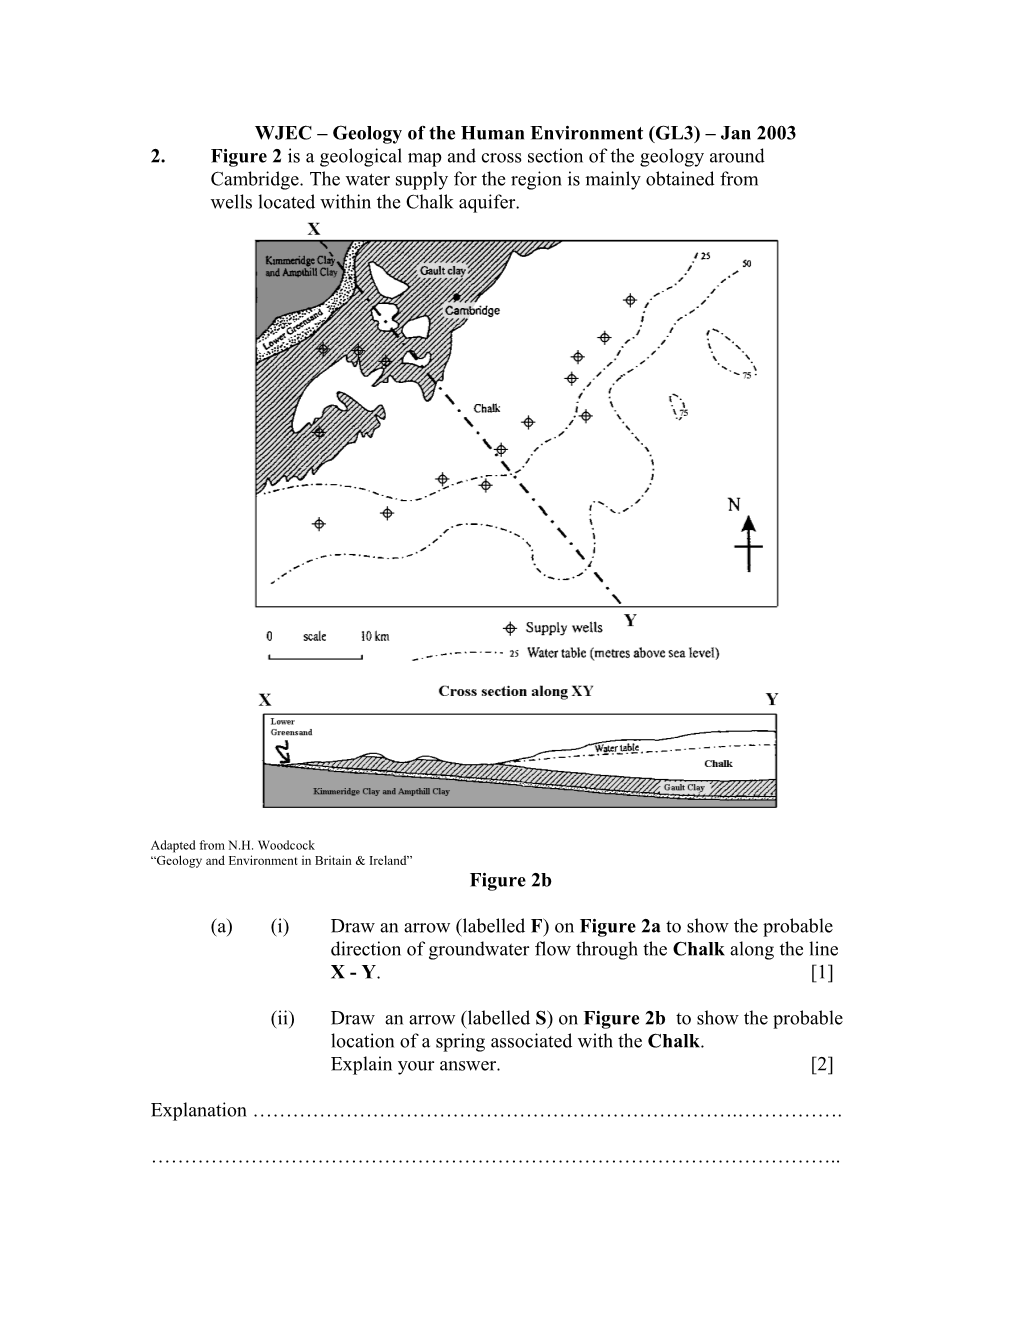 WJEC Geology of the Human Environment (GL3) Jan 2003